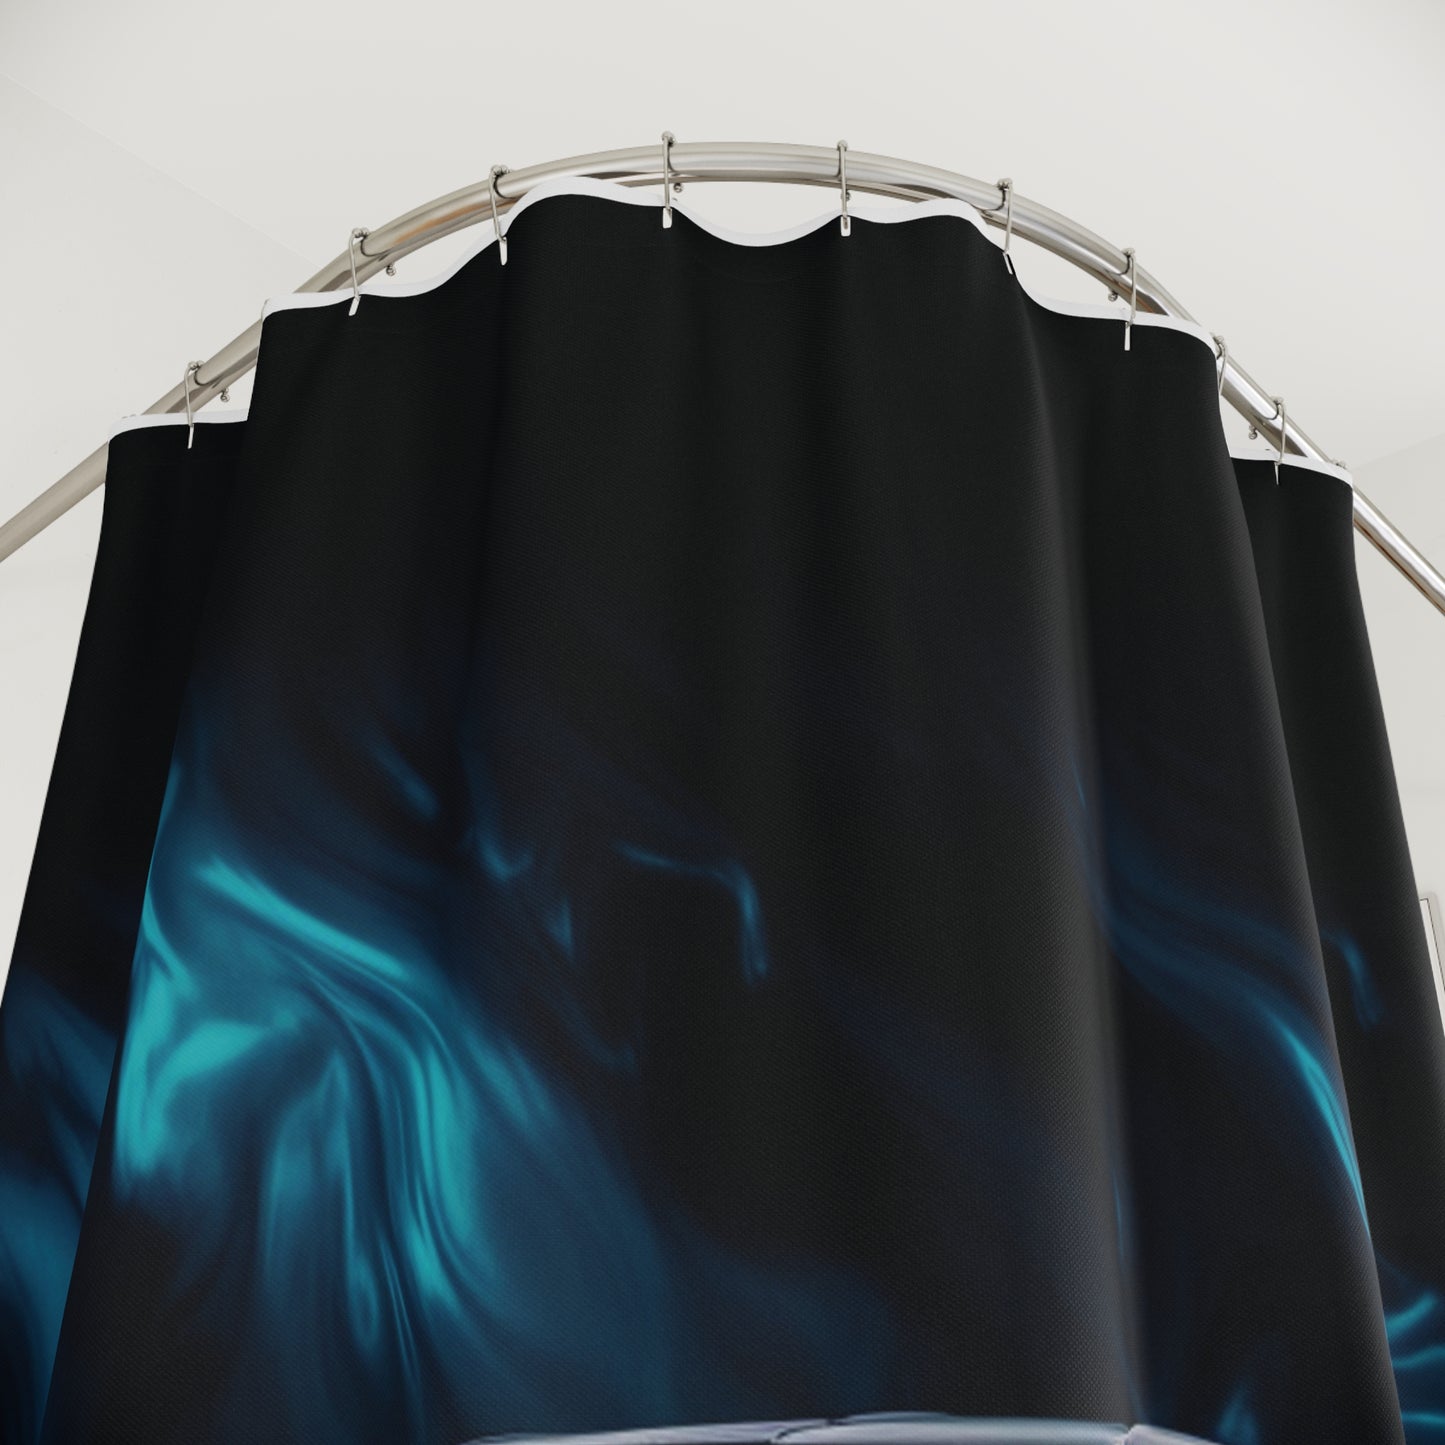 Polyester Shower Curtain Hyper Bugatti 1